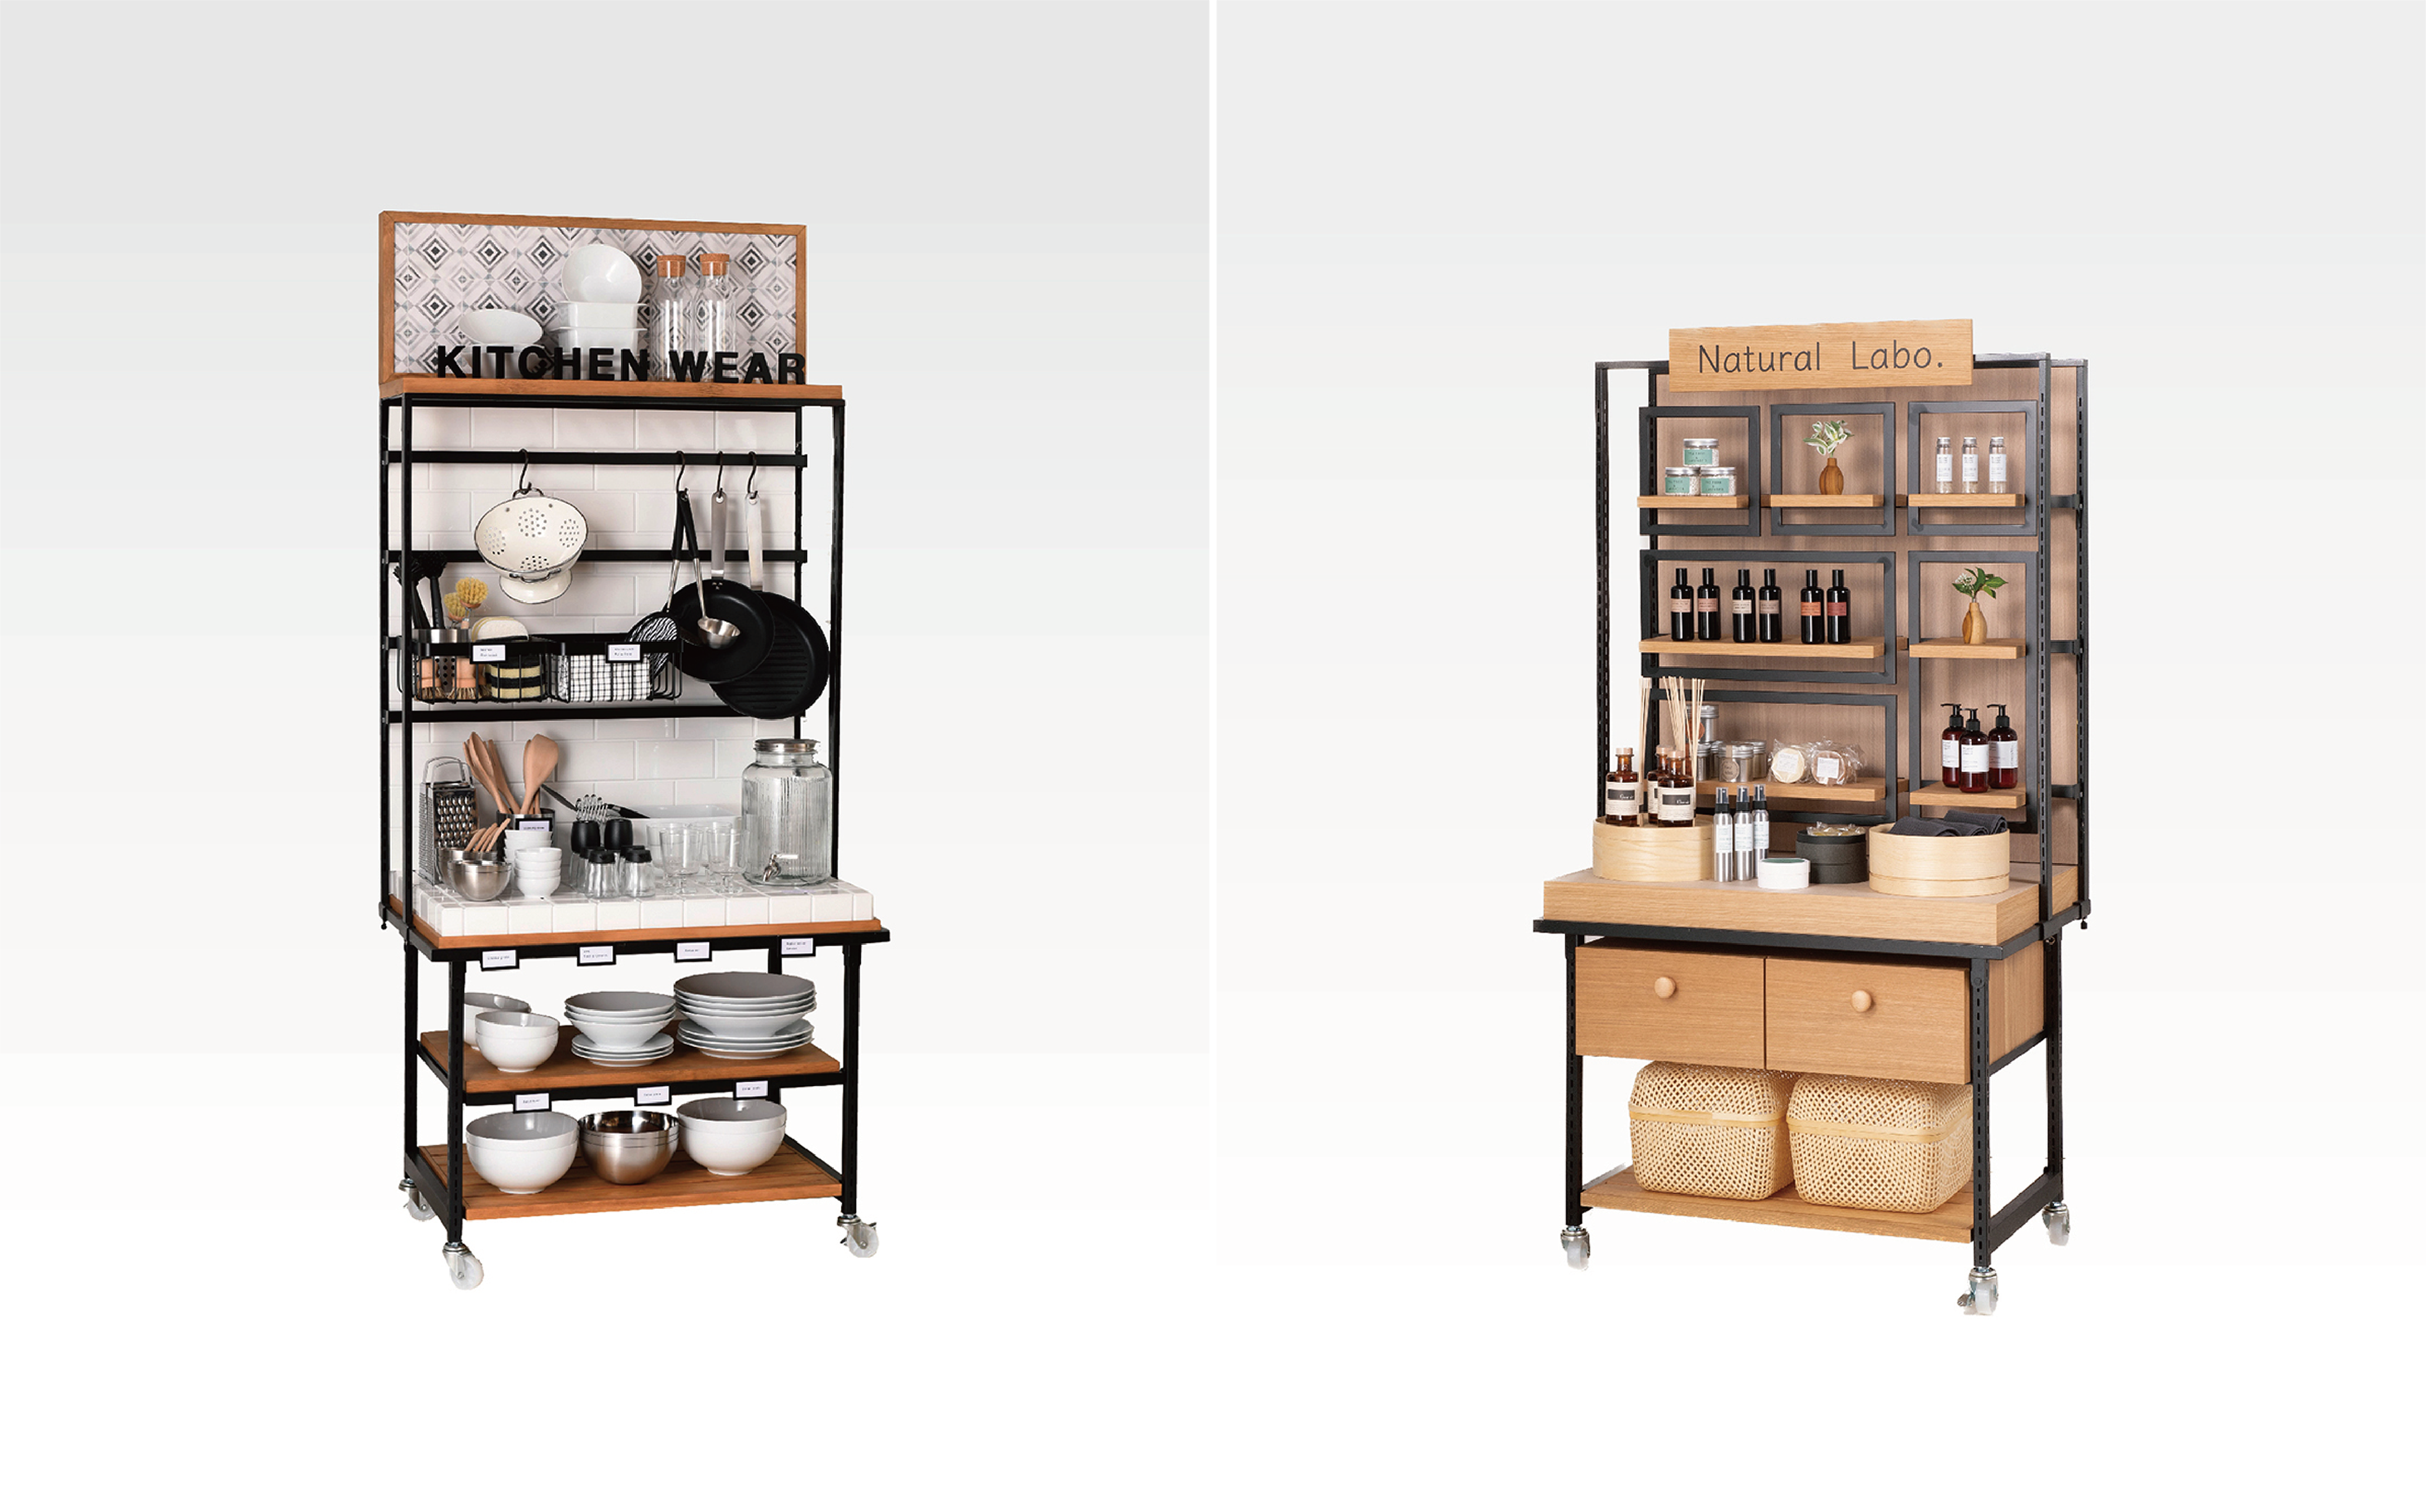 system-fixtures-display-examples-prototype-kitchen-wear-cosmetics